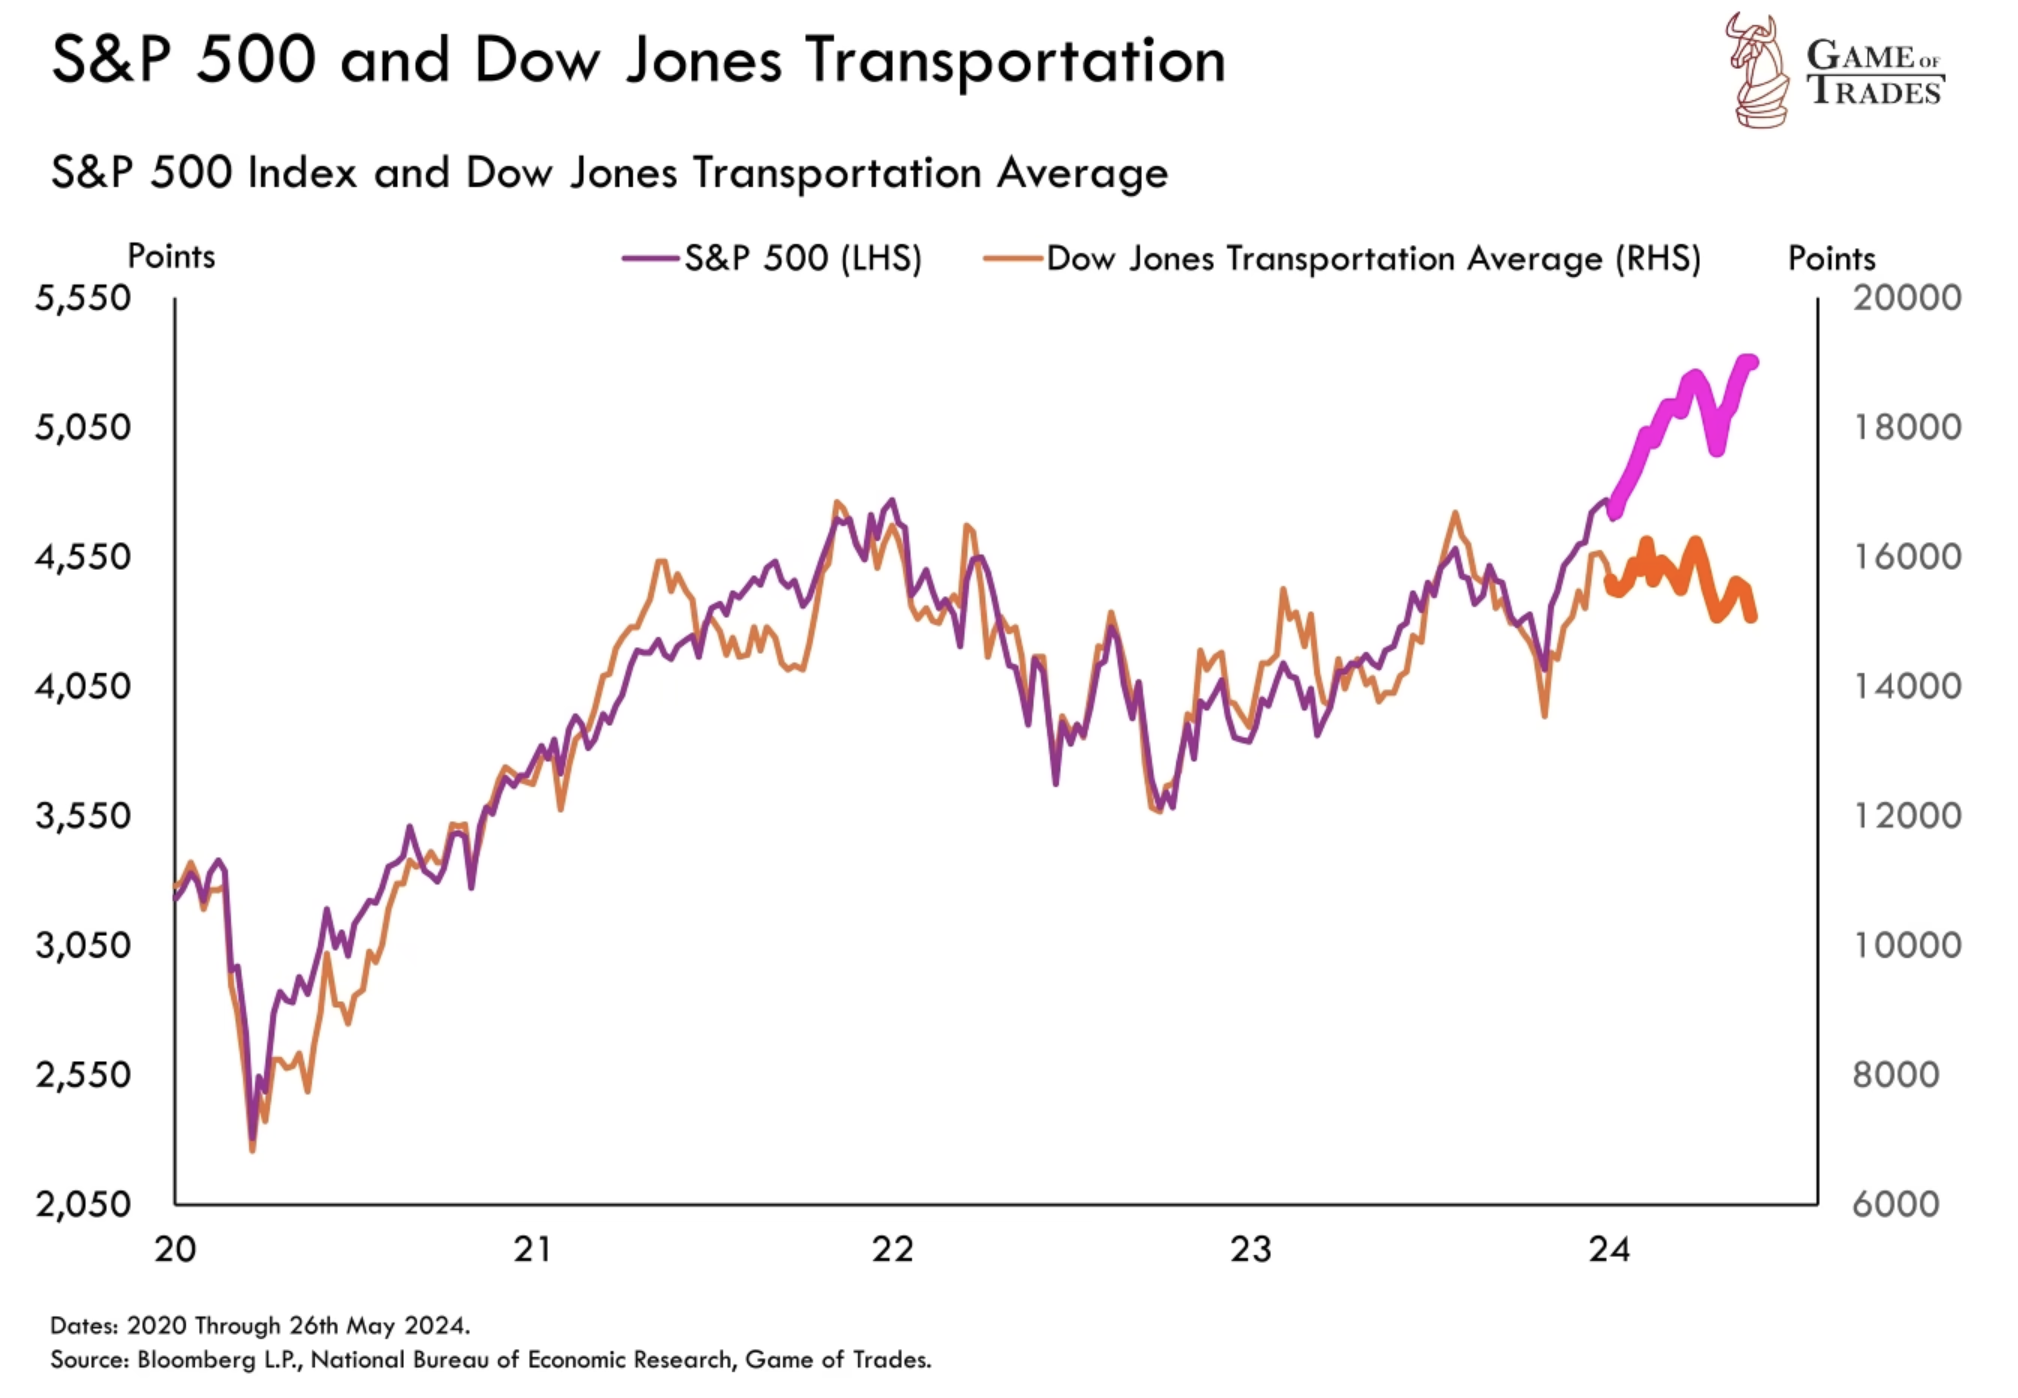 dow jones transportation average